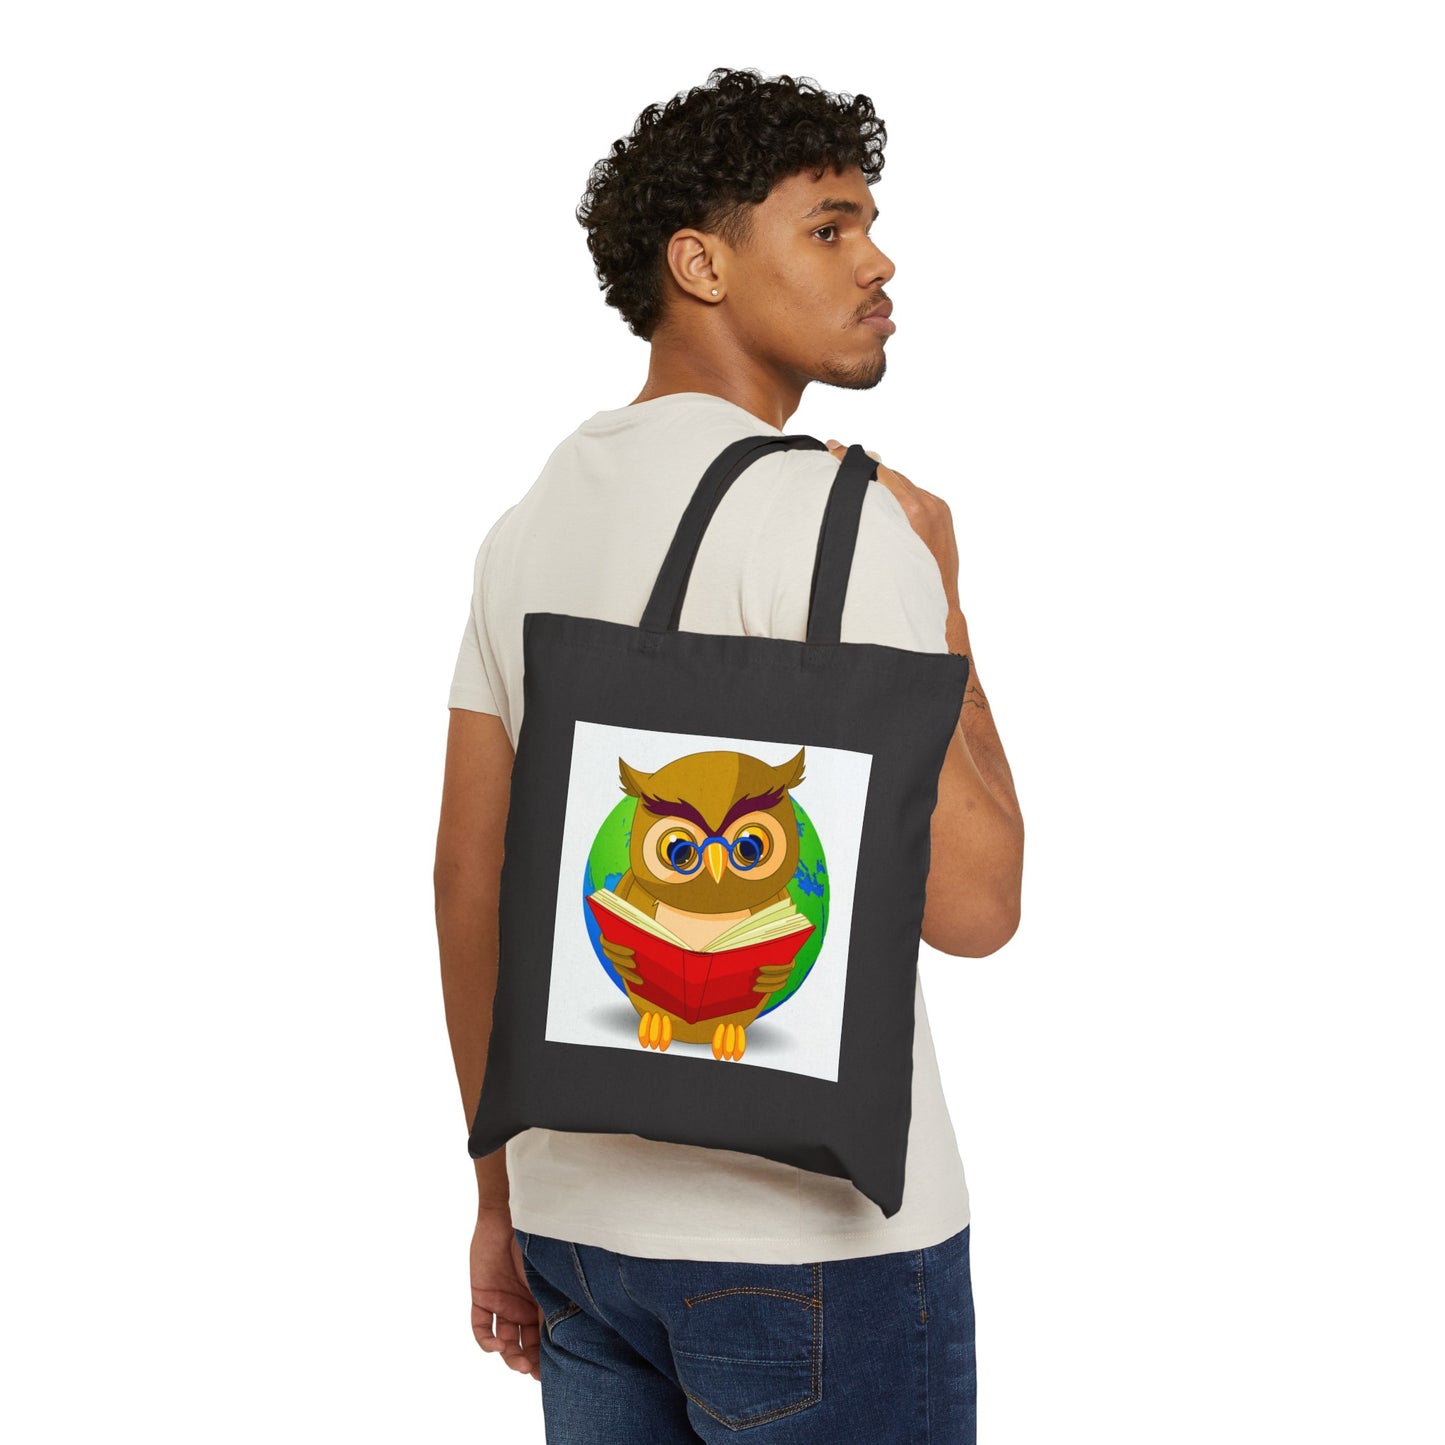 Cotton Canvas Tote Bag: Owl Reading